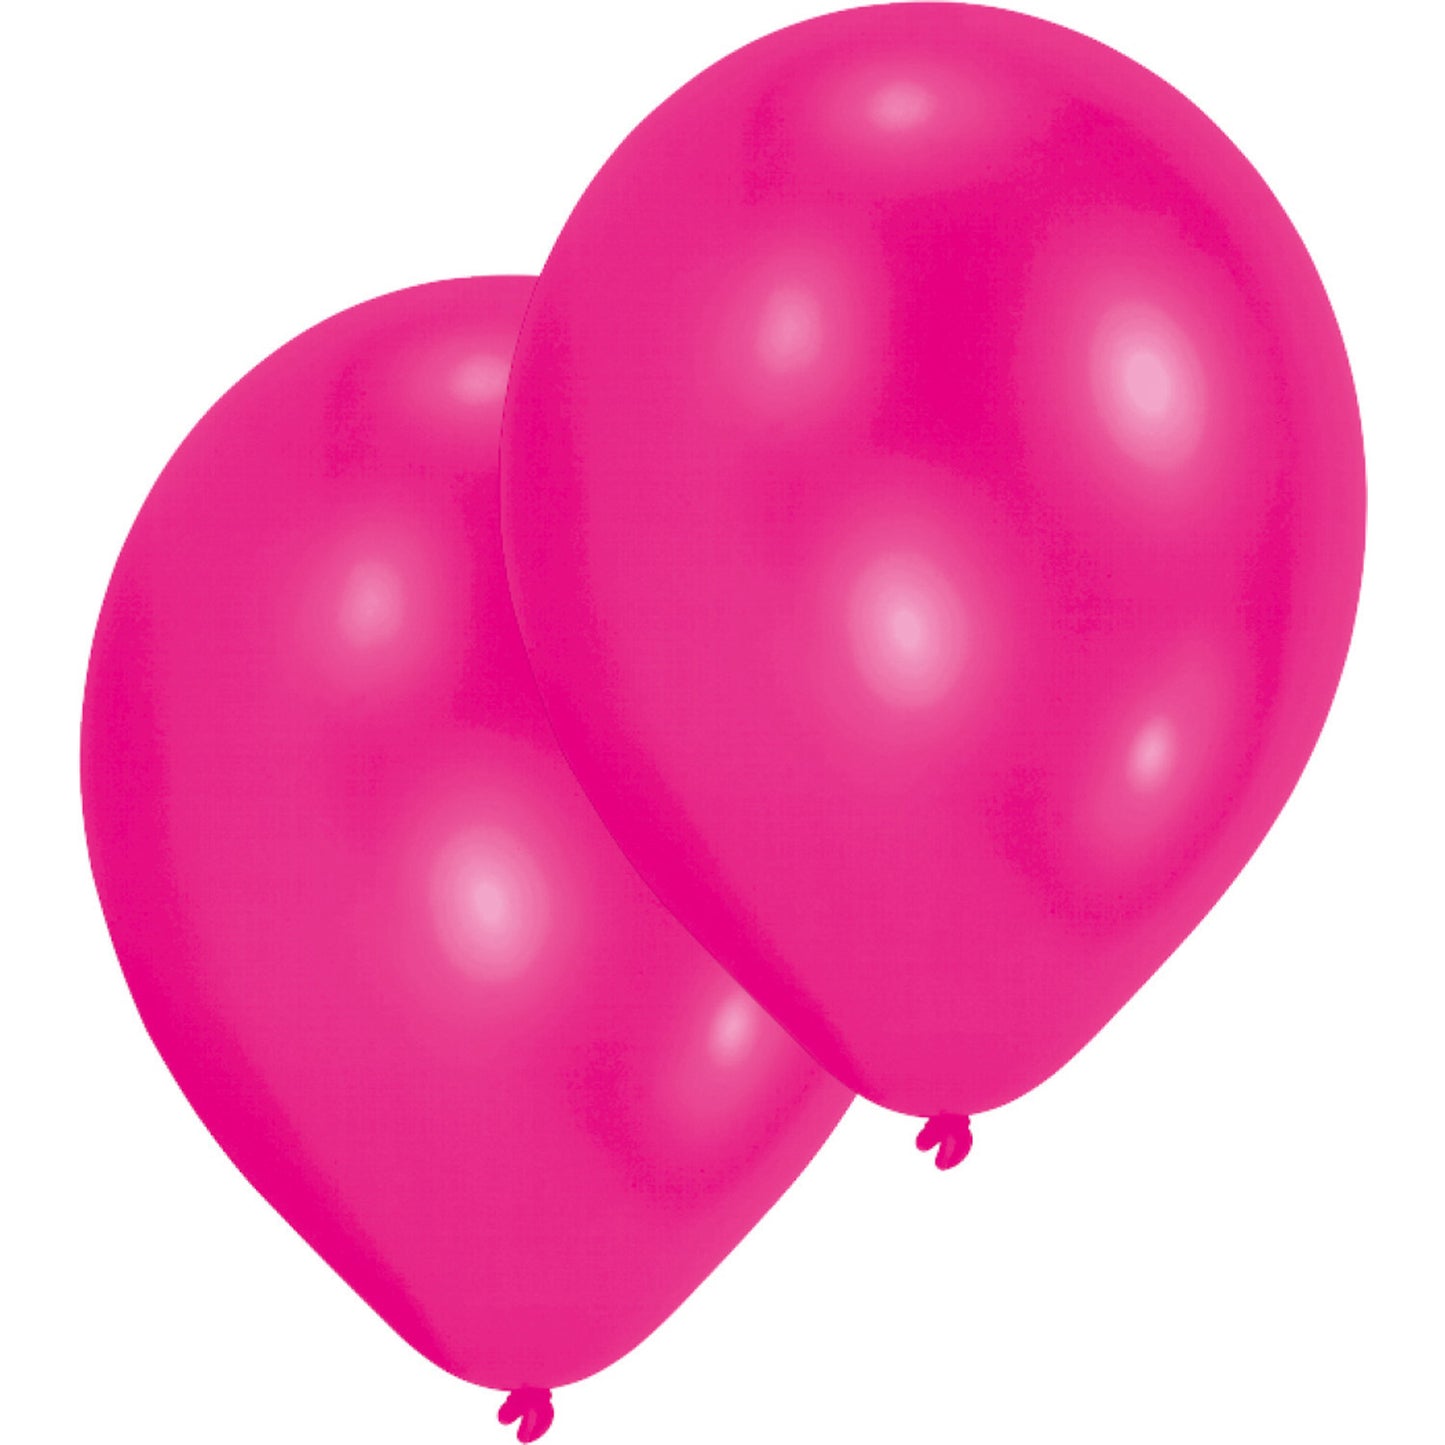 50 standard hot pink latex balloons